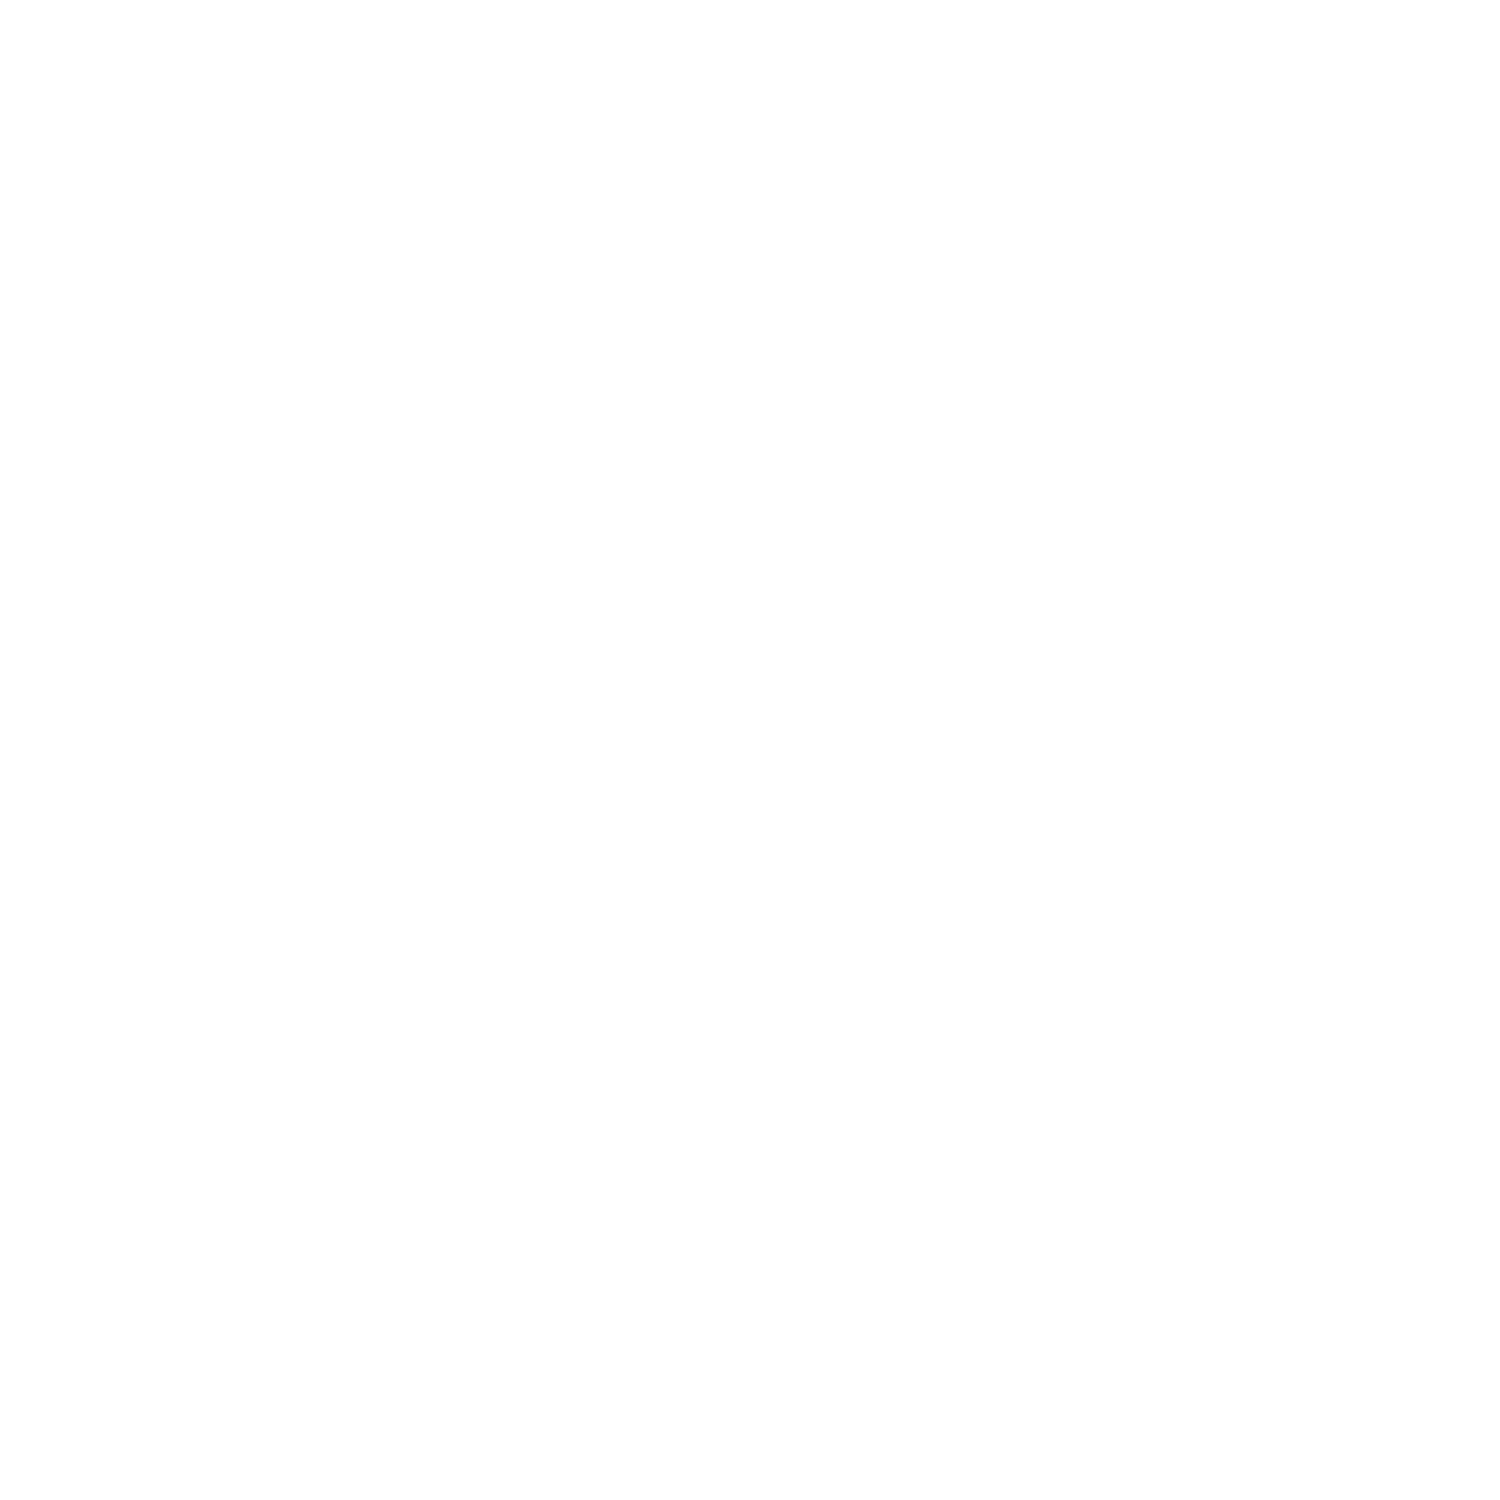 KENTON PLACE